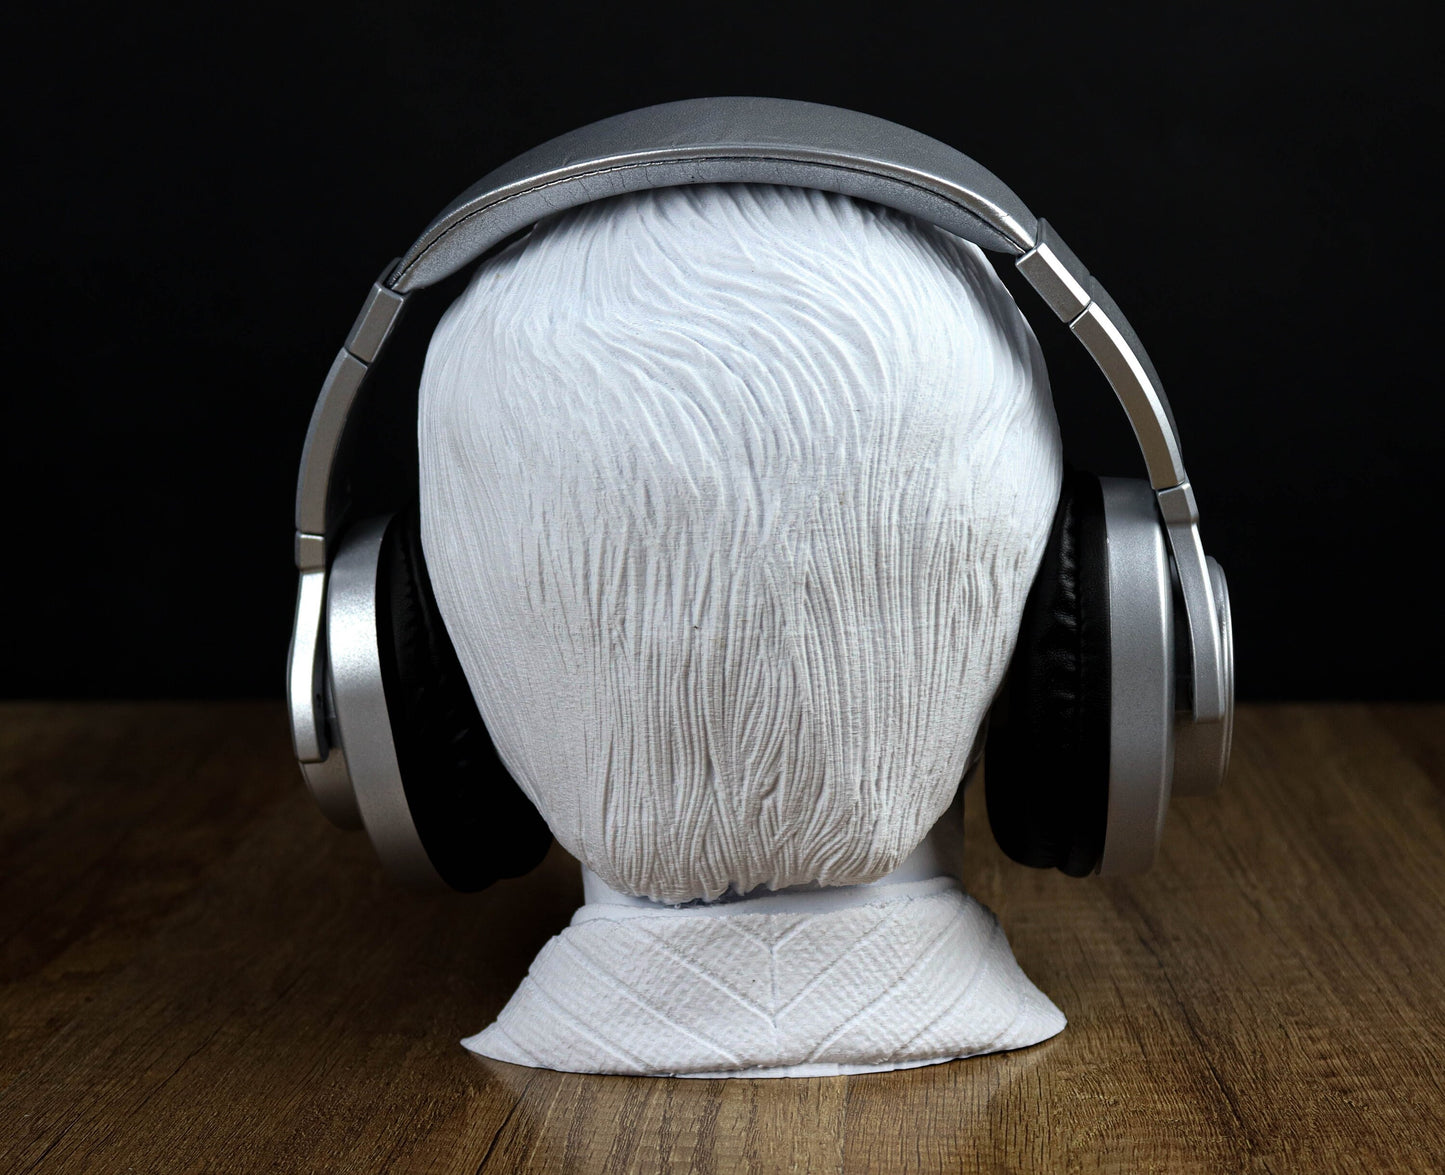 Nicholas Cage Headphone Holder, Headset Stand, Bust, Sculpture, Decoration